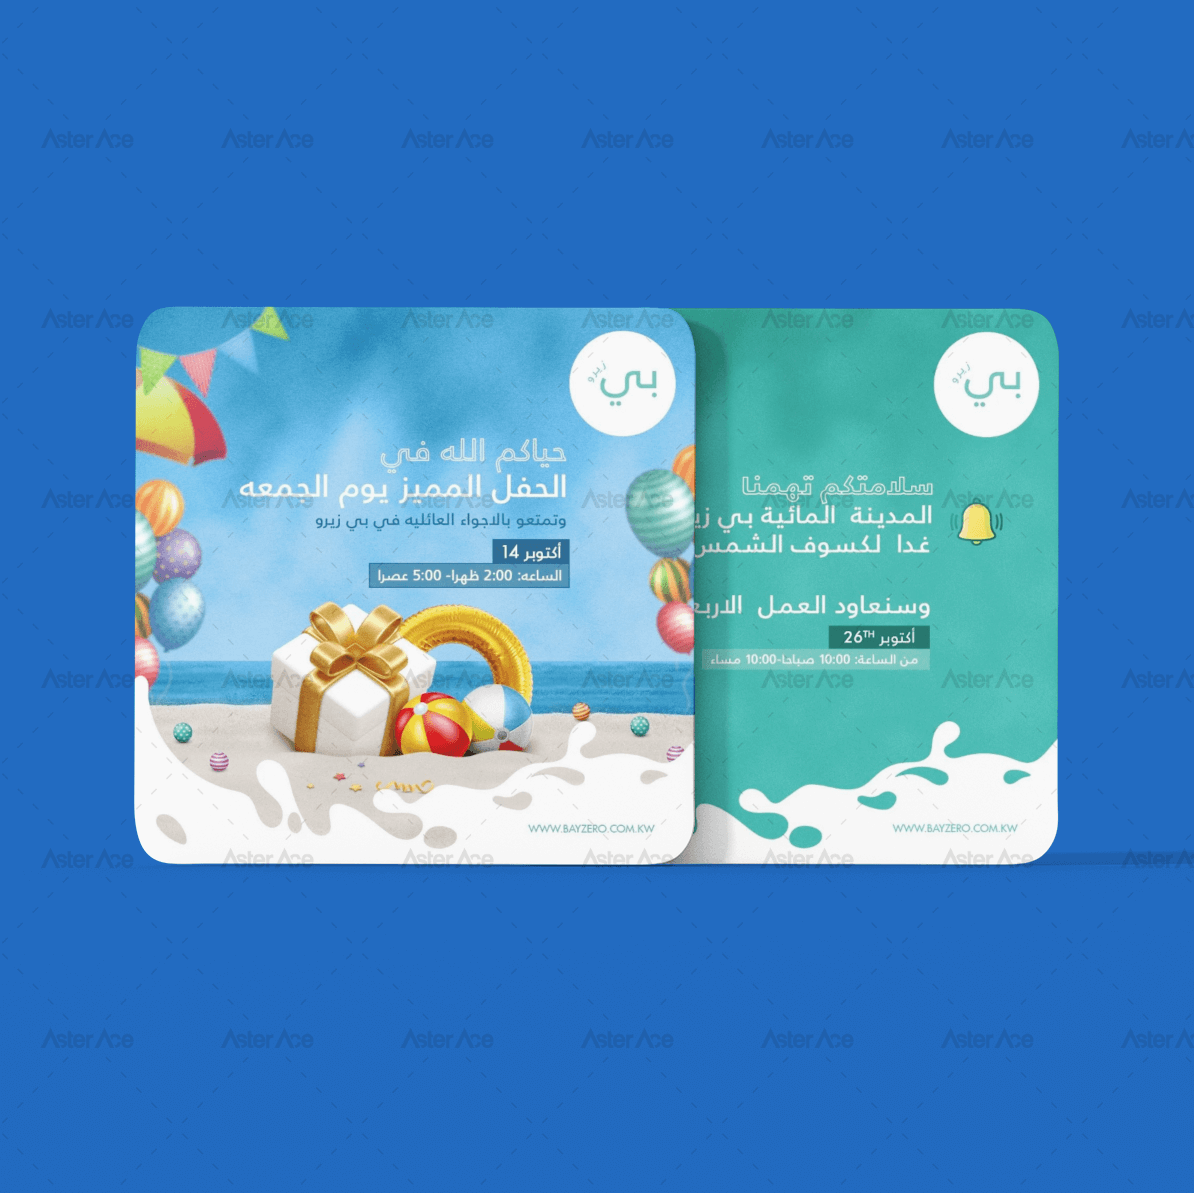 Bay Zero Kuwait LIfestyle Water Theme Park Online Promotion Designs